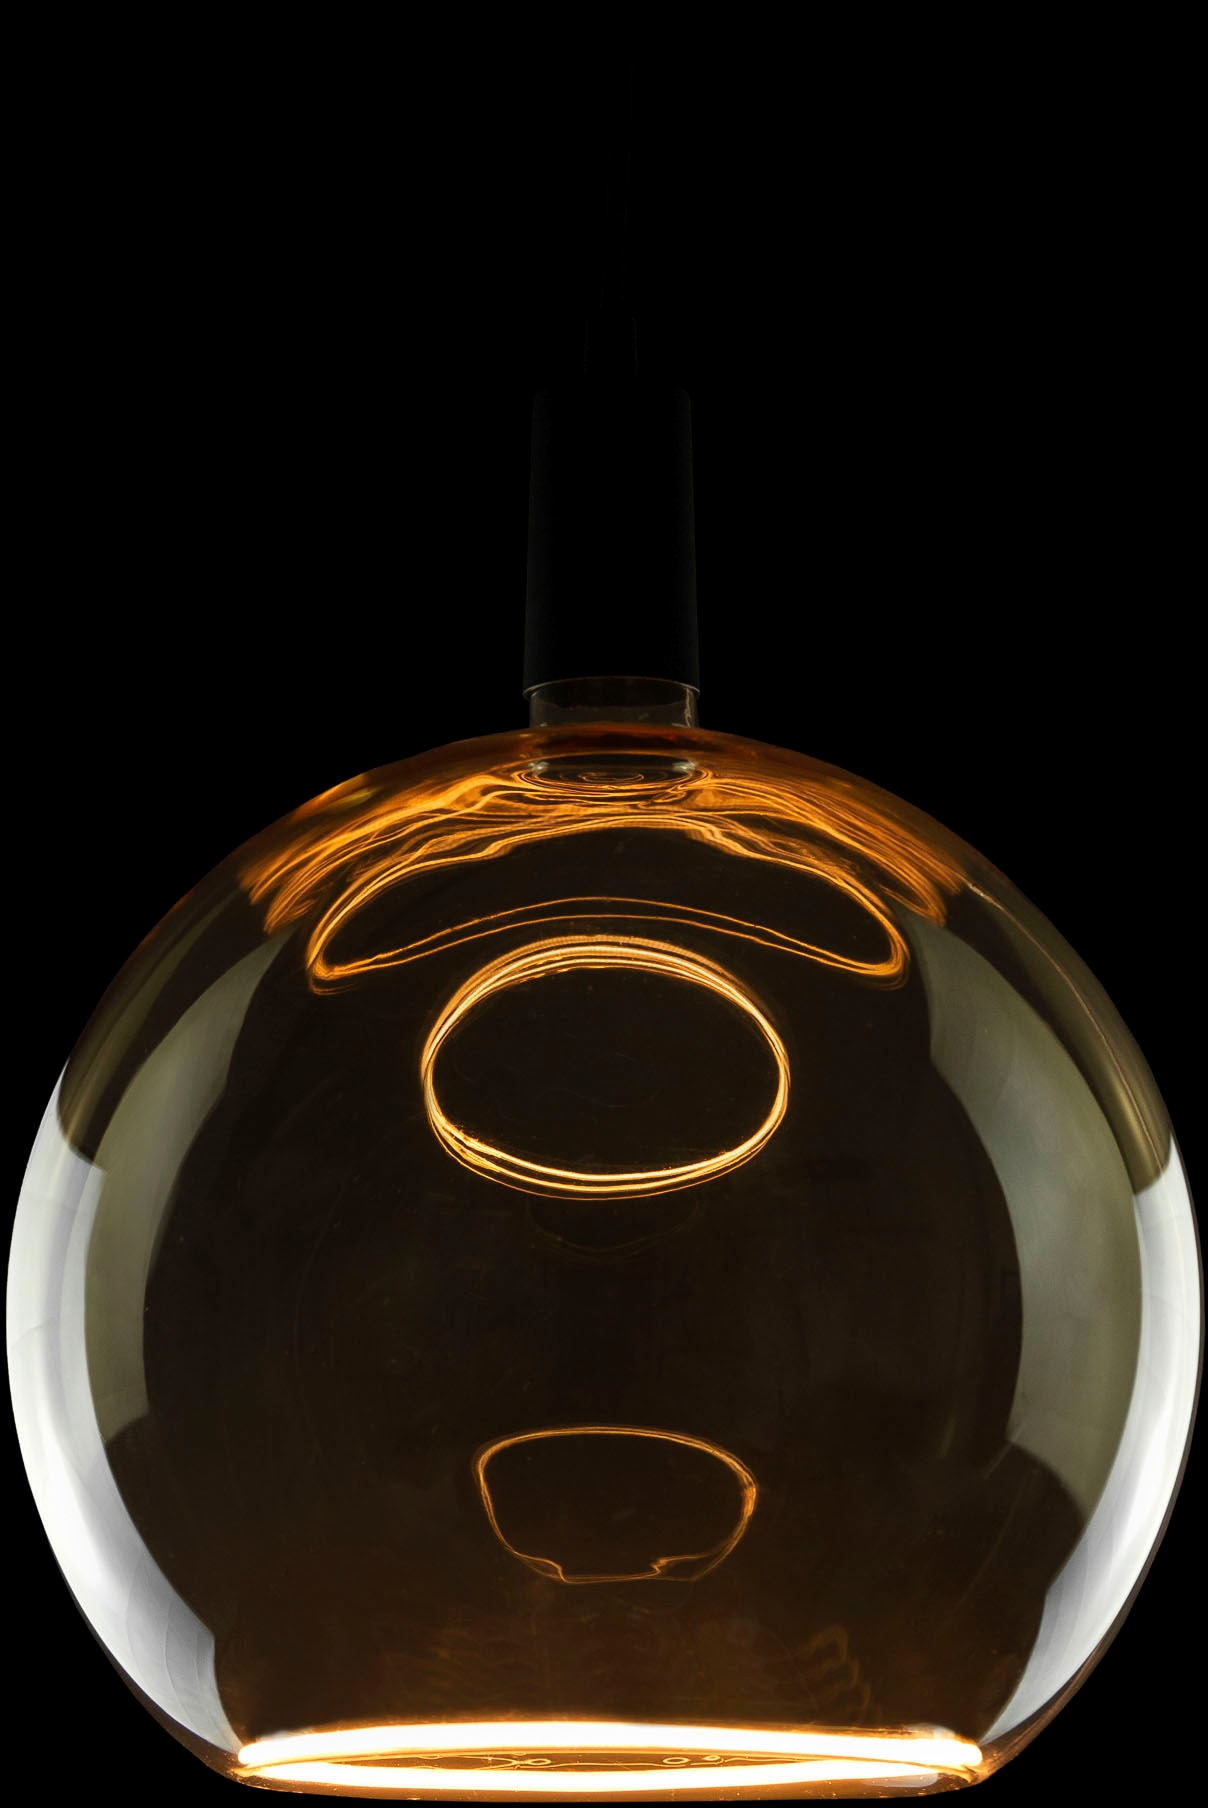 SEGULA LED-Leuchtmittel »LED Floating Globe 300 gold«, E27, 1 St., Extra-Warmweiß, LED Floating Globe 300 gold, E27, 5W, CRI 90, dimmbar